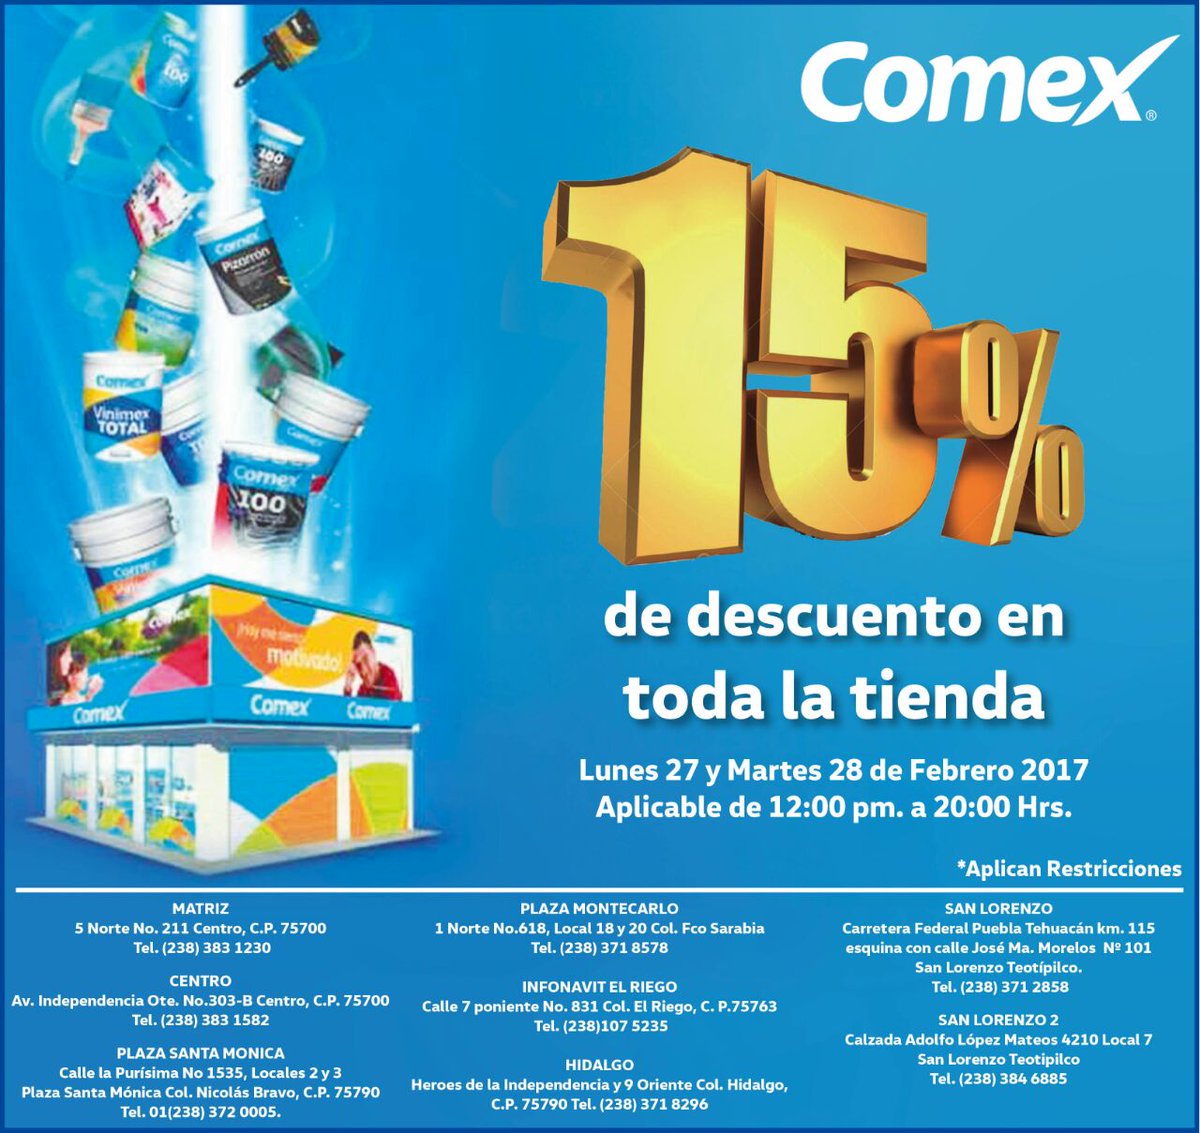 PintaComex Tehuacan (@Pinta_Comex) / Twitter